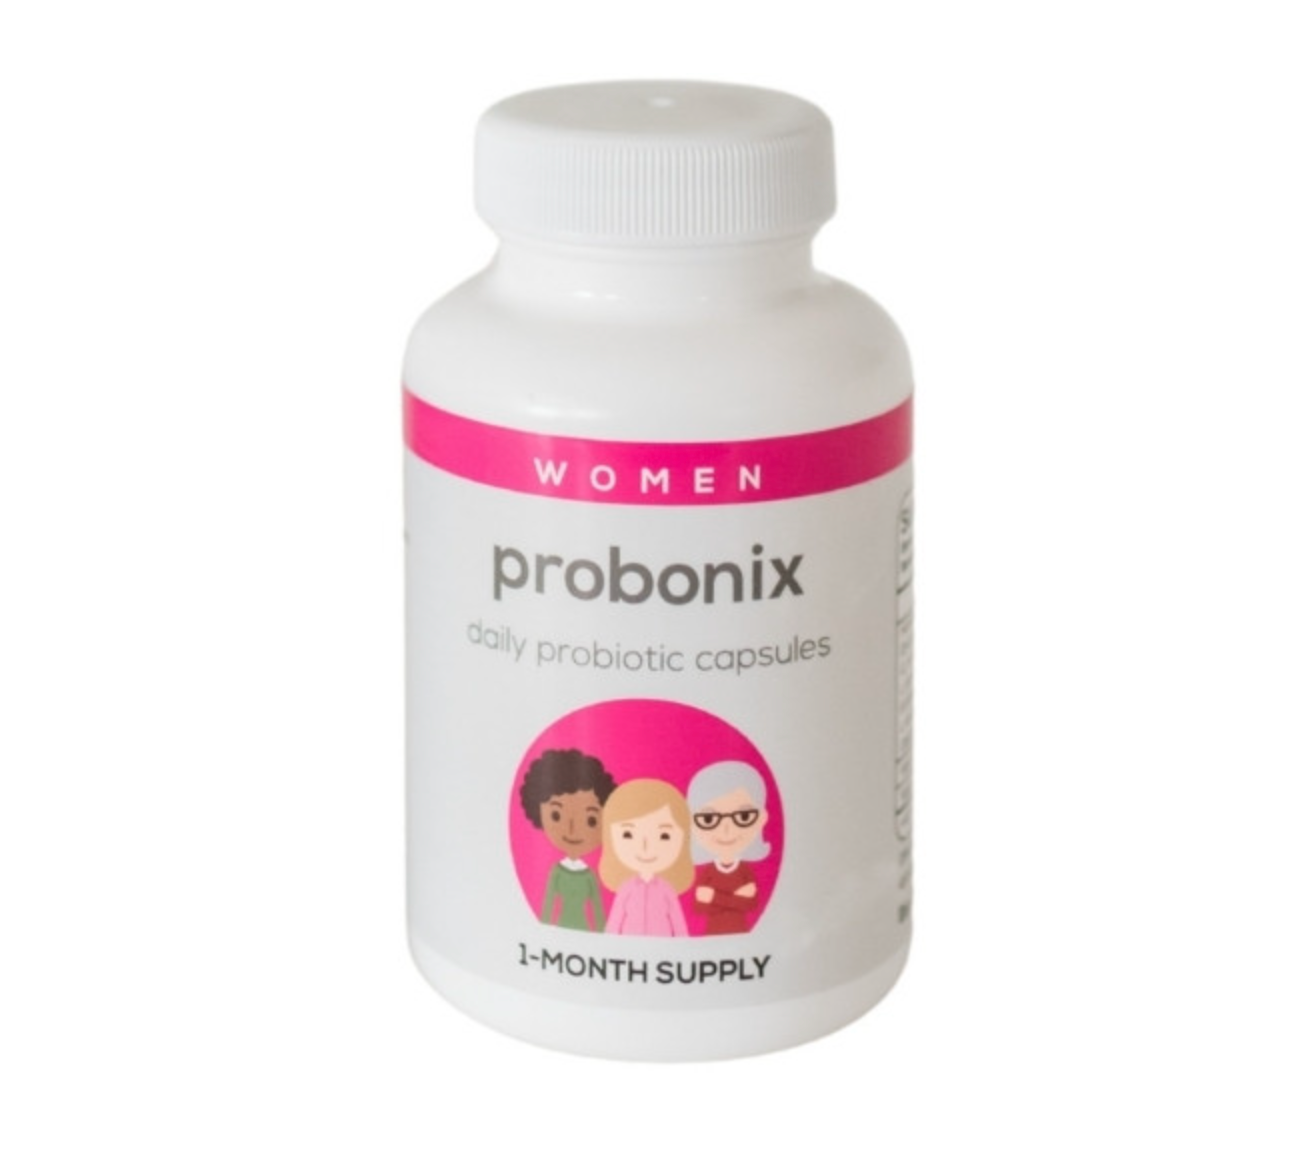 Probonix Women Daily Probiotic Capsules